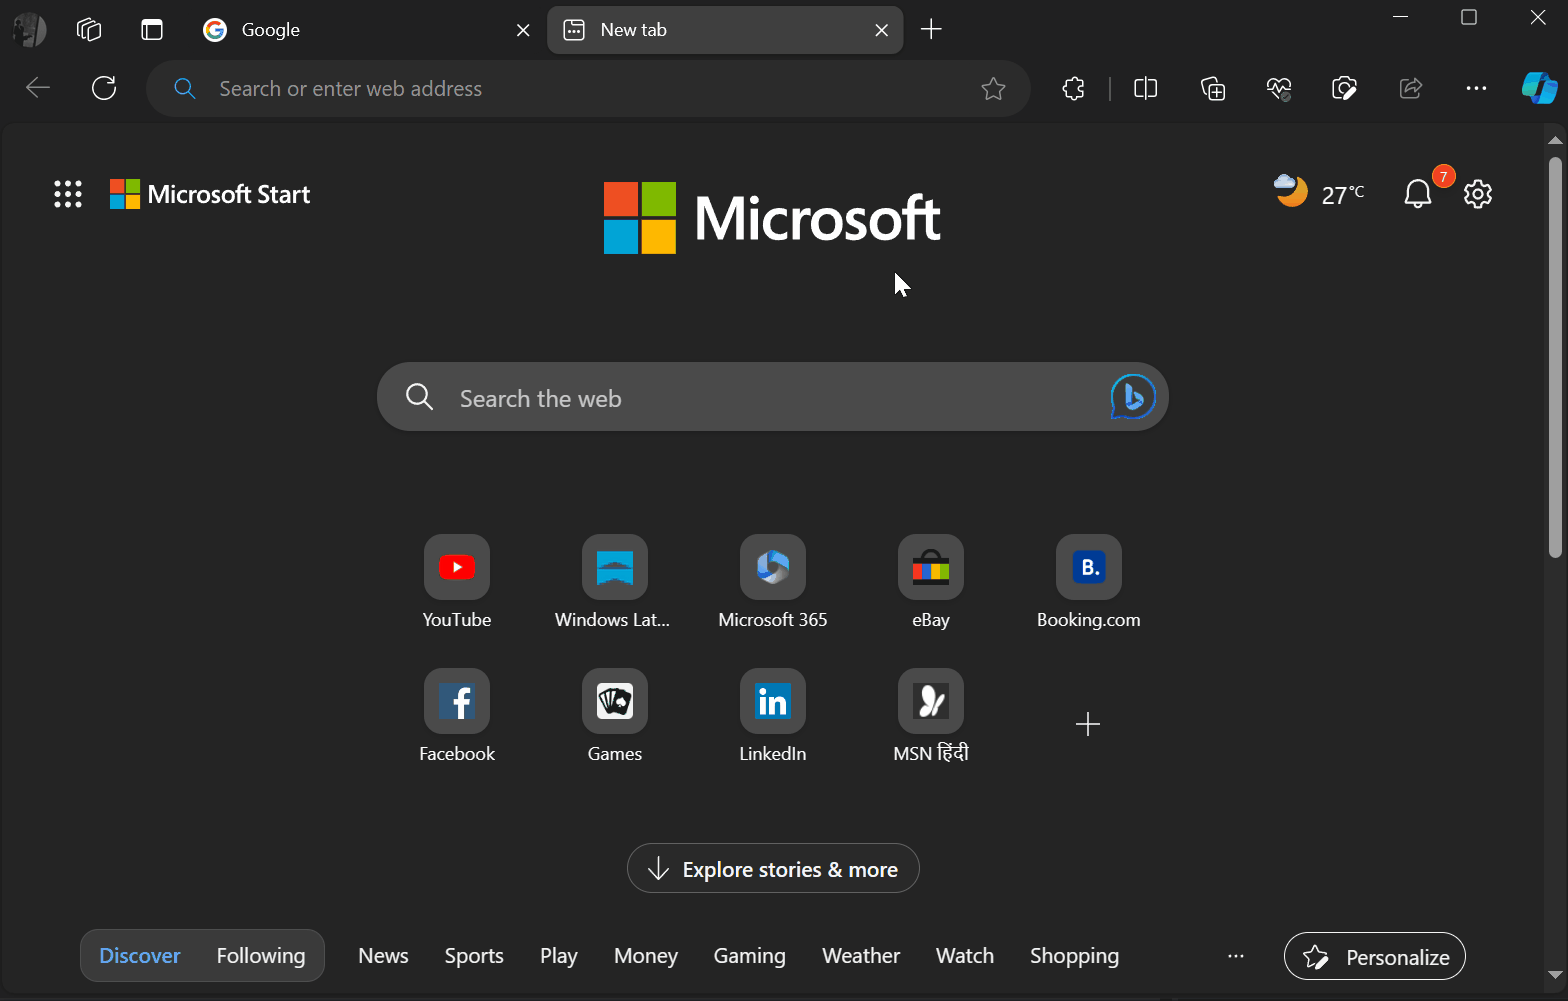 Microsoft Edge split screen drag and drop